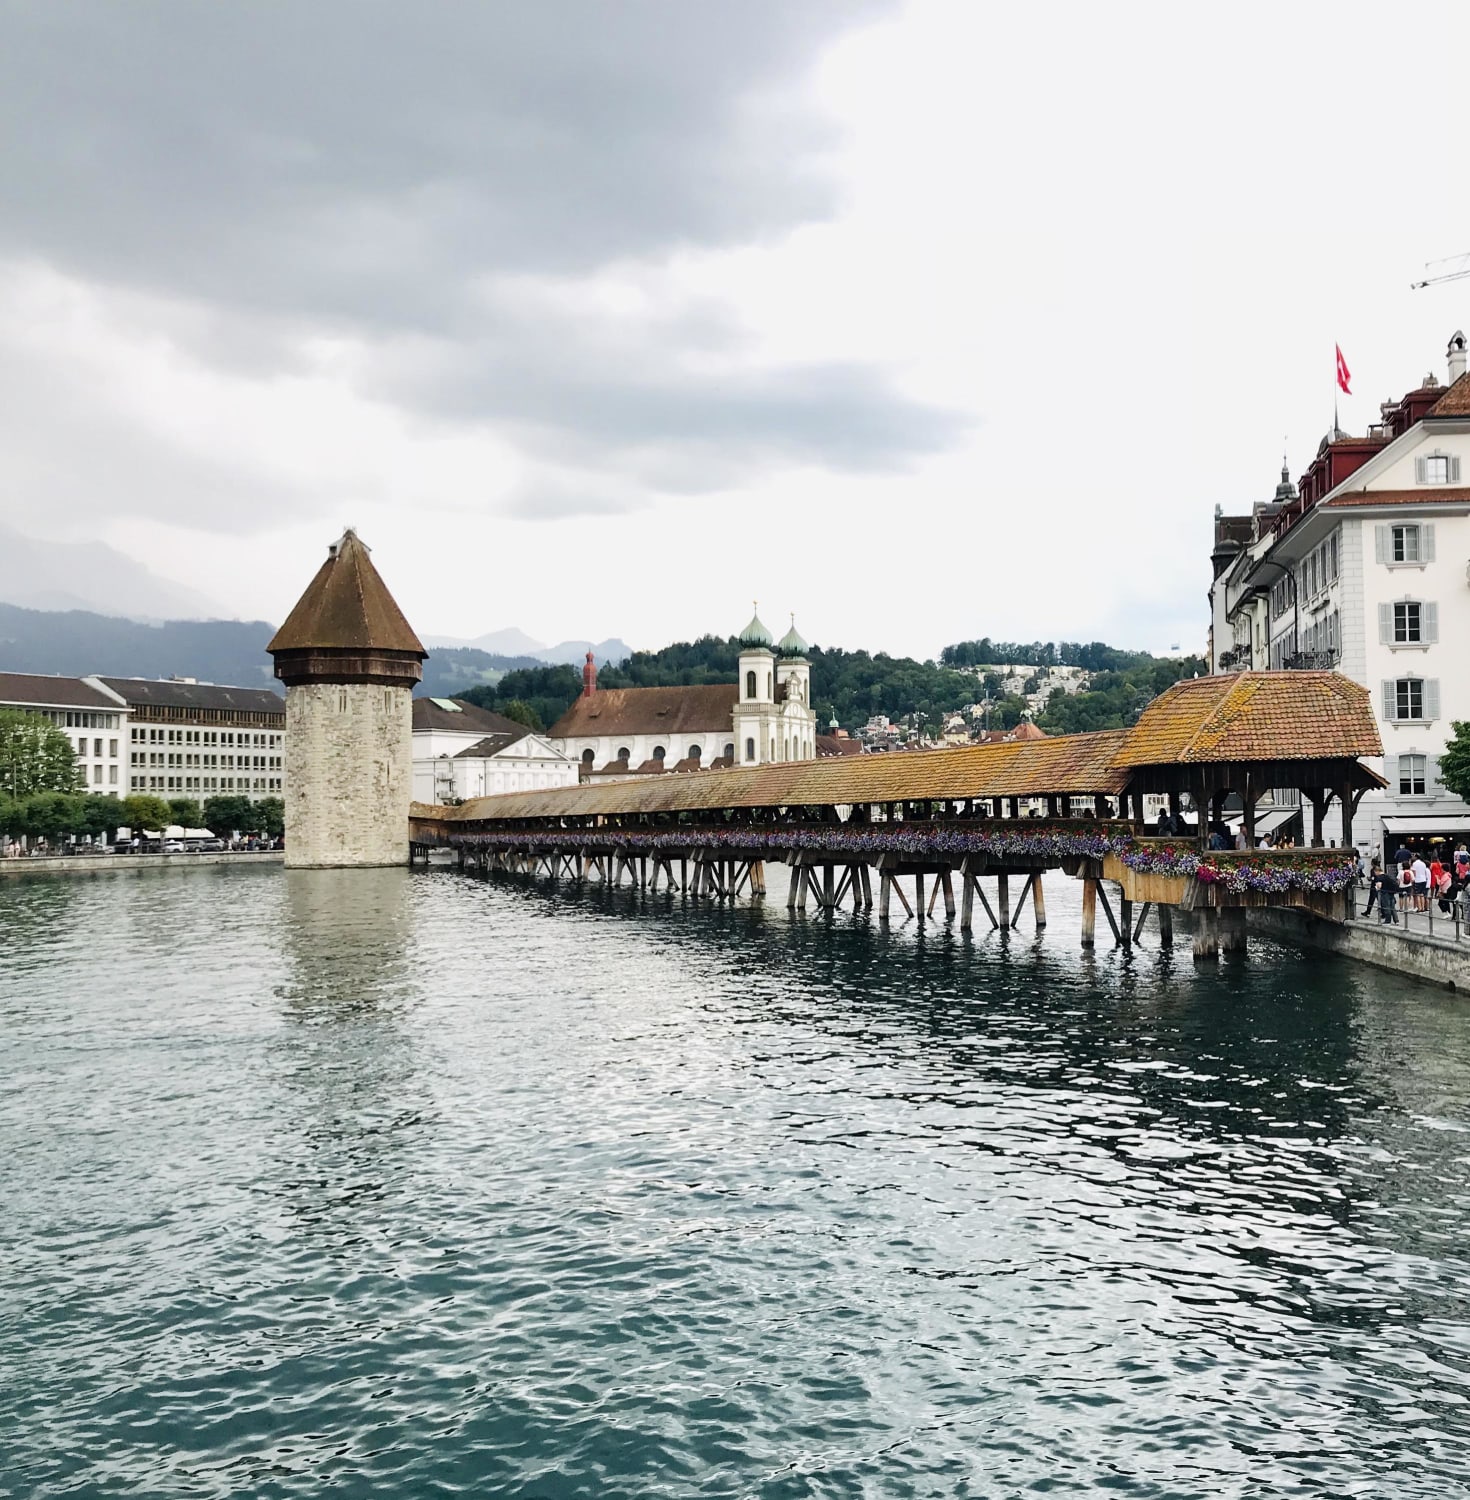 Kapellbrücke Bridge in Lucerne, Switzerland.picture taken in 2019